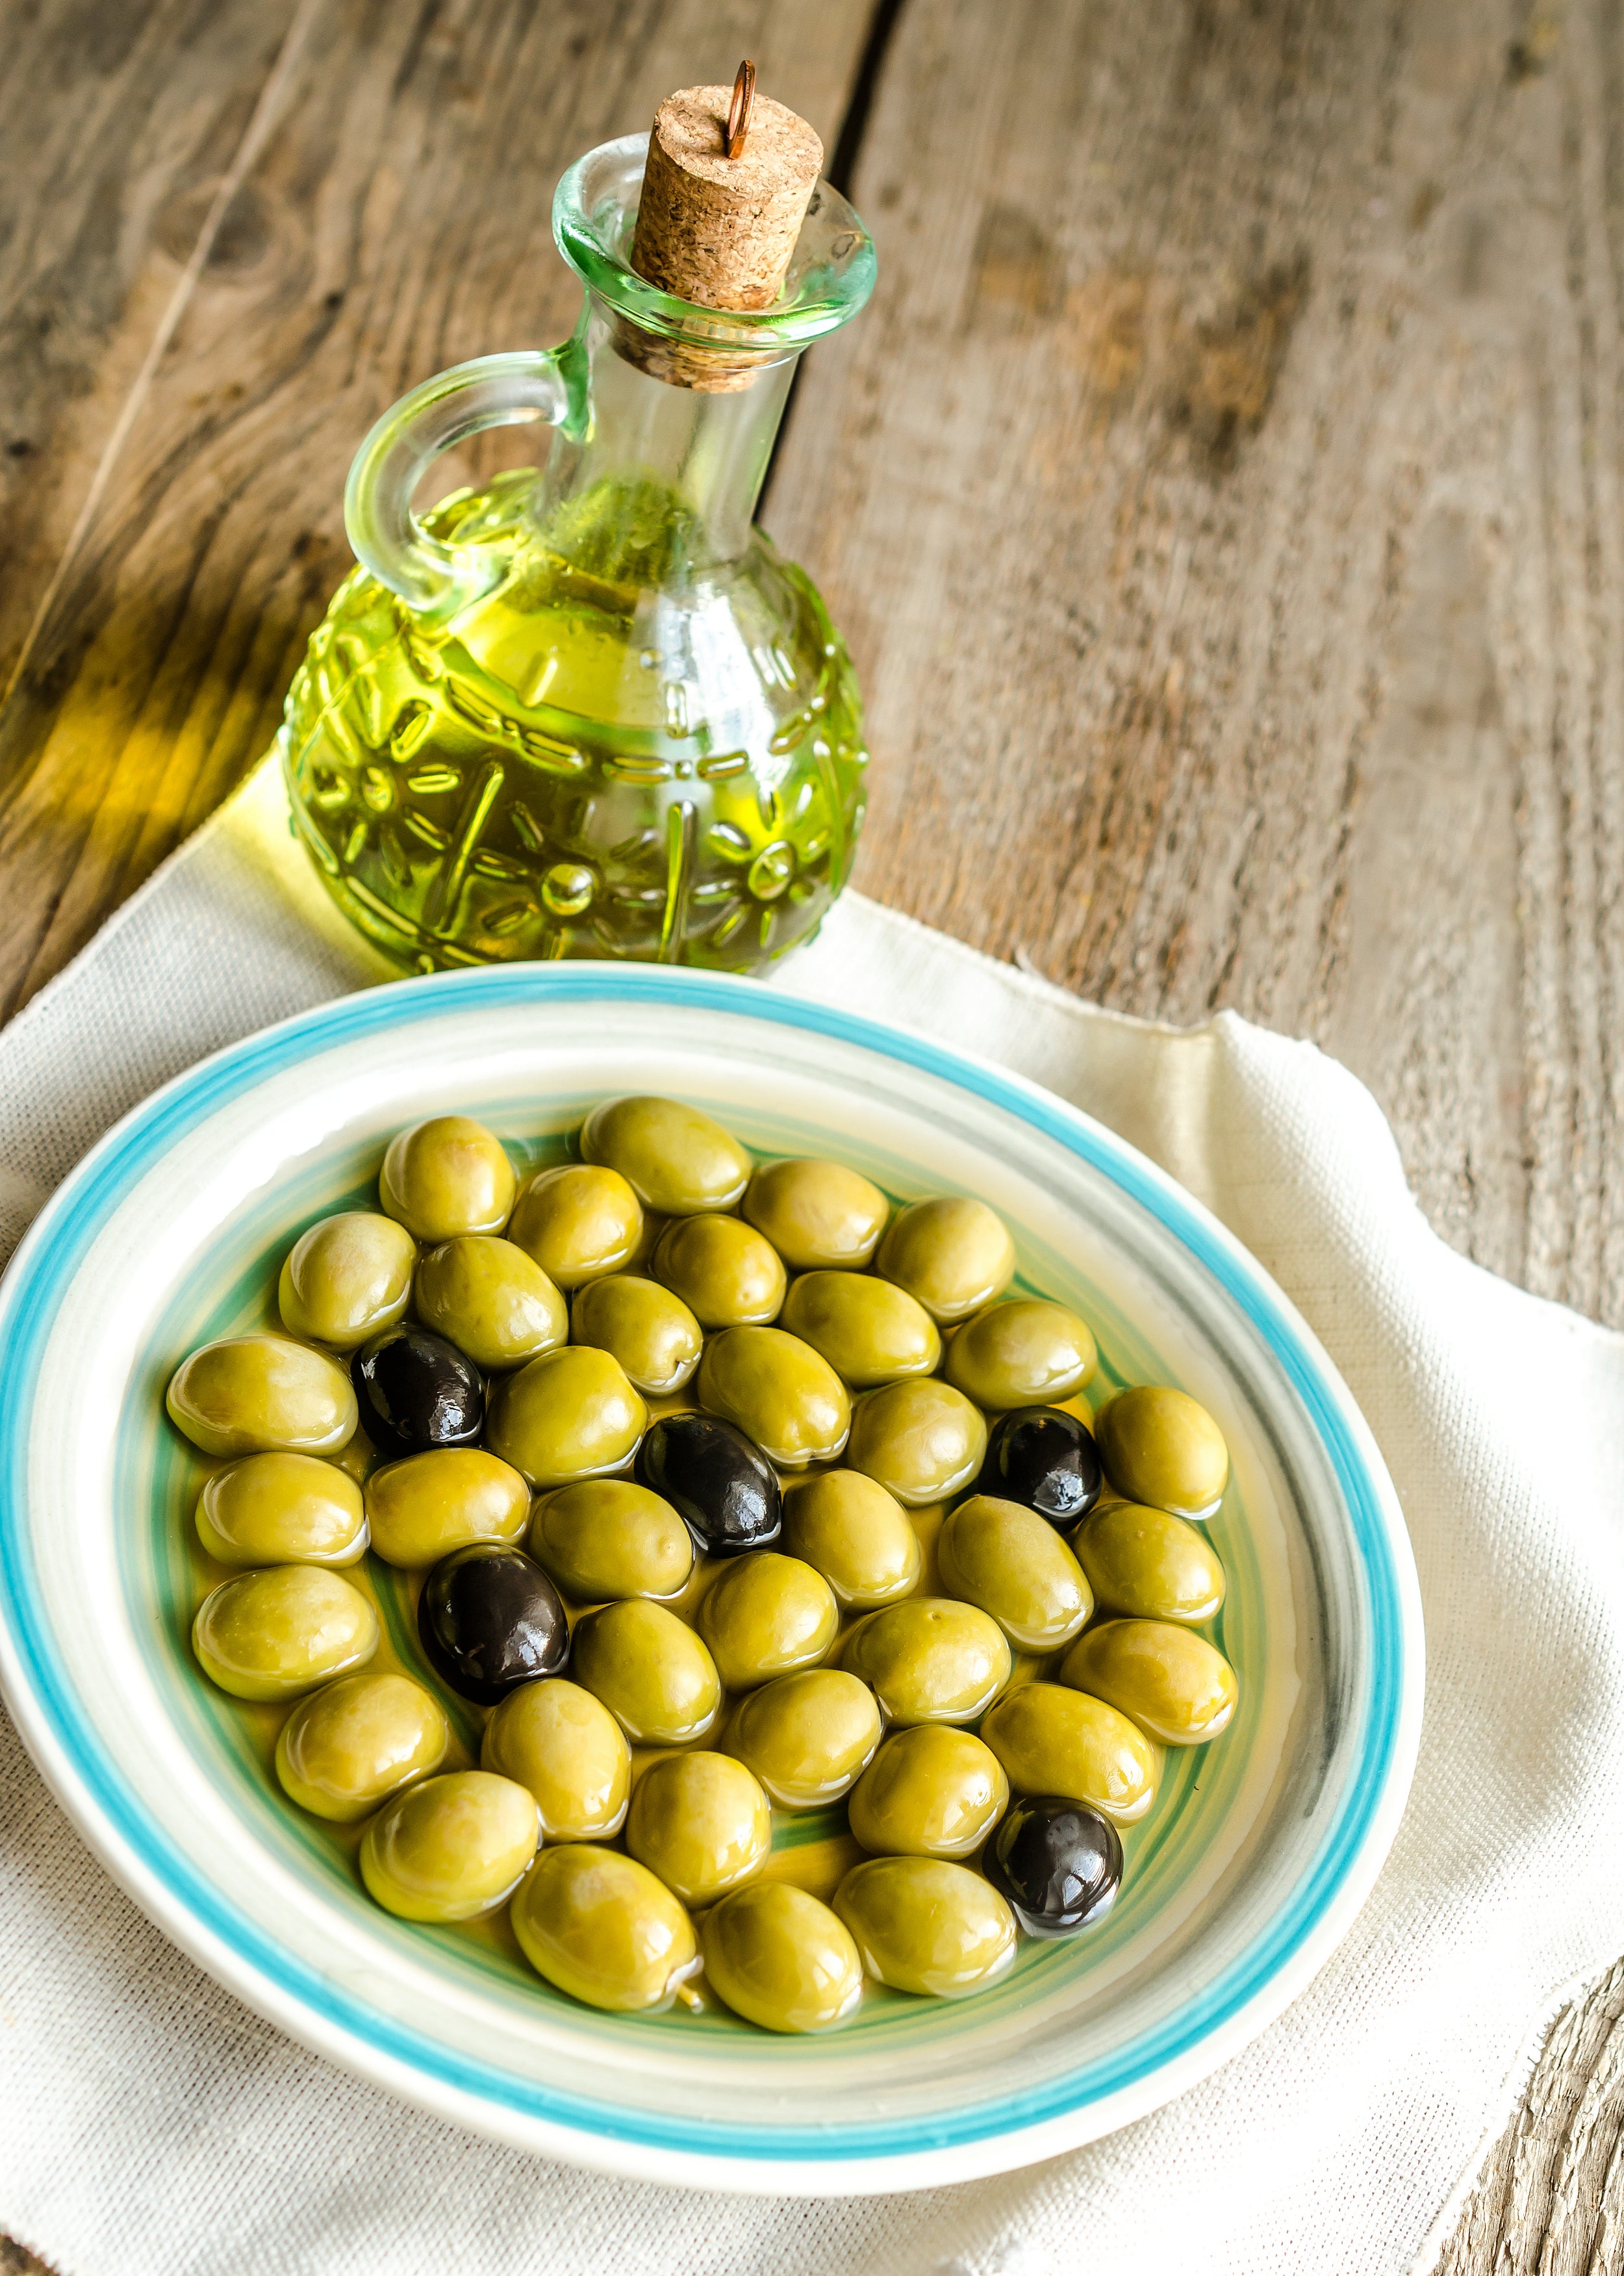 We love Palestinian Olive Oil